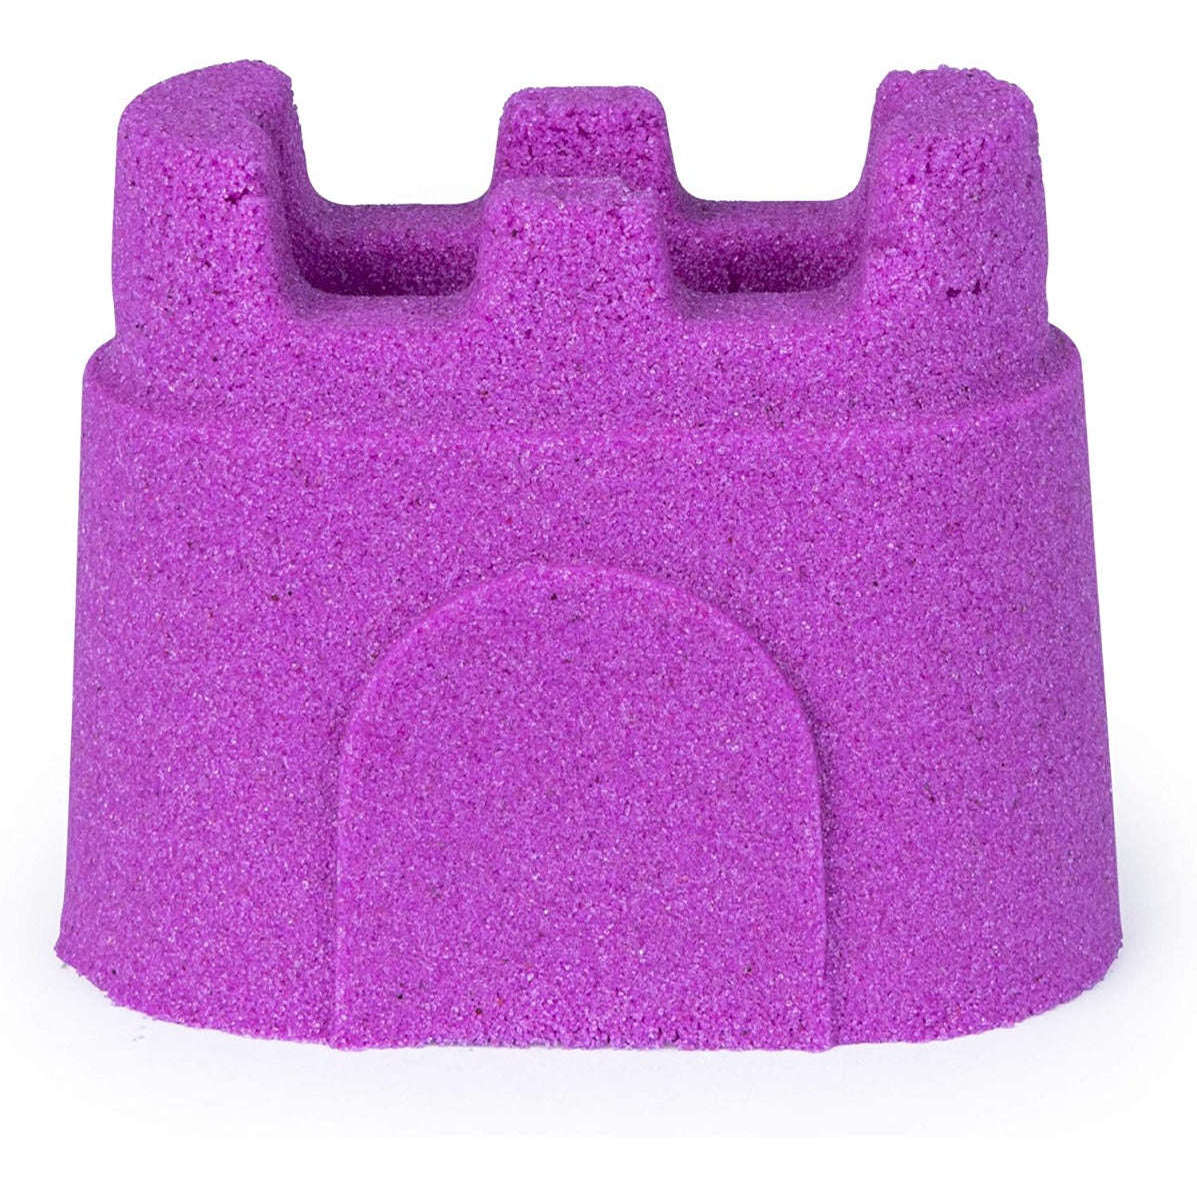 Toys N Tuck:Kinetic Sand 4.5oz Single Container - Purple,Kinetic Sand